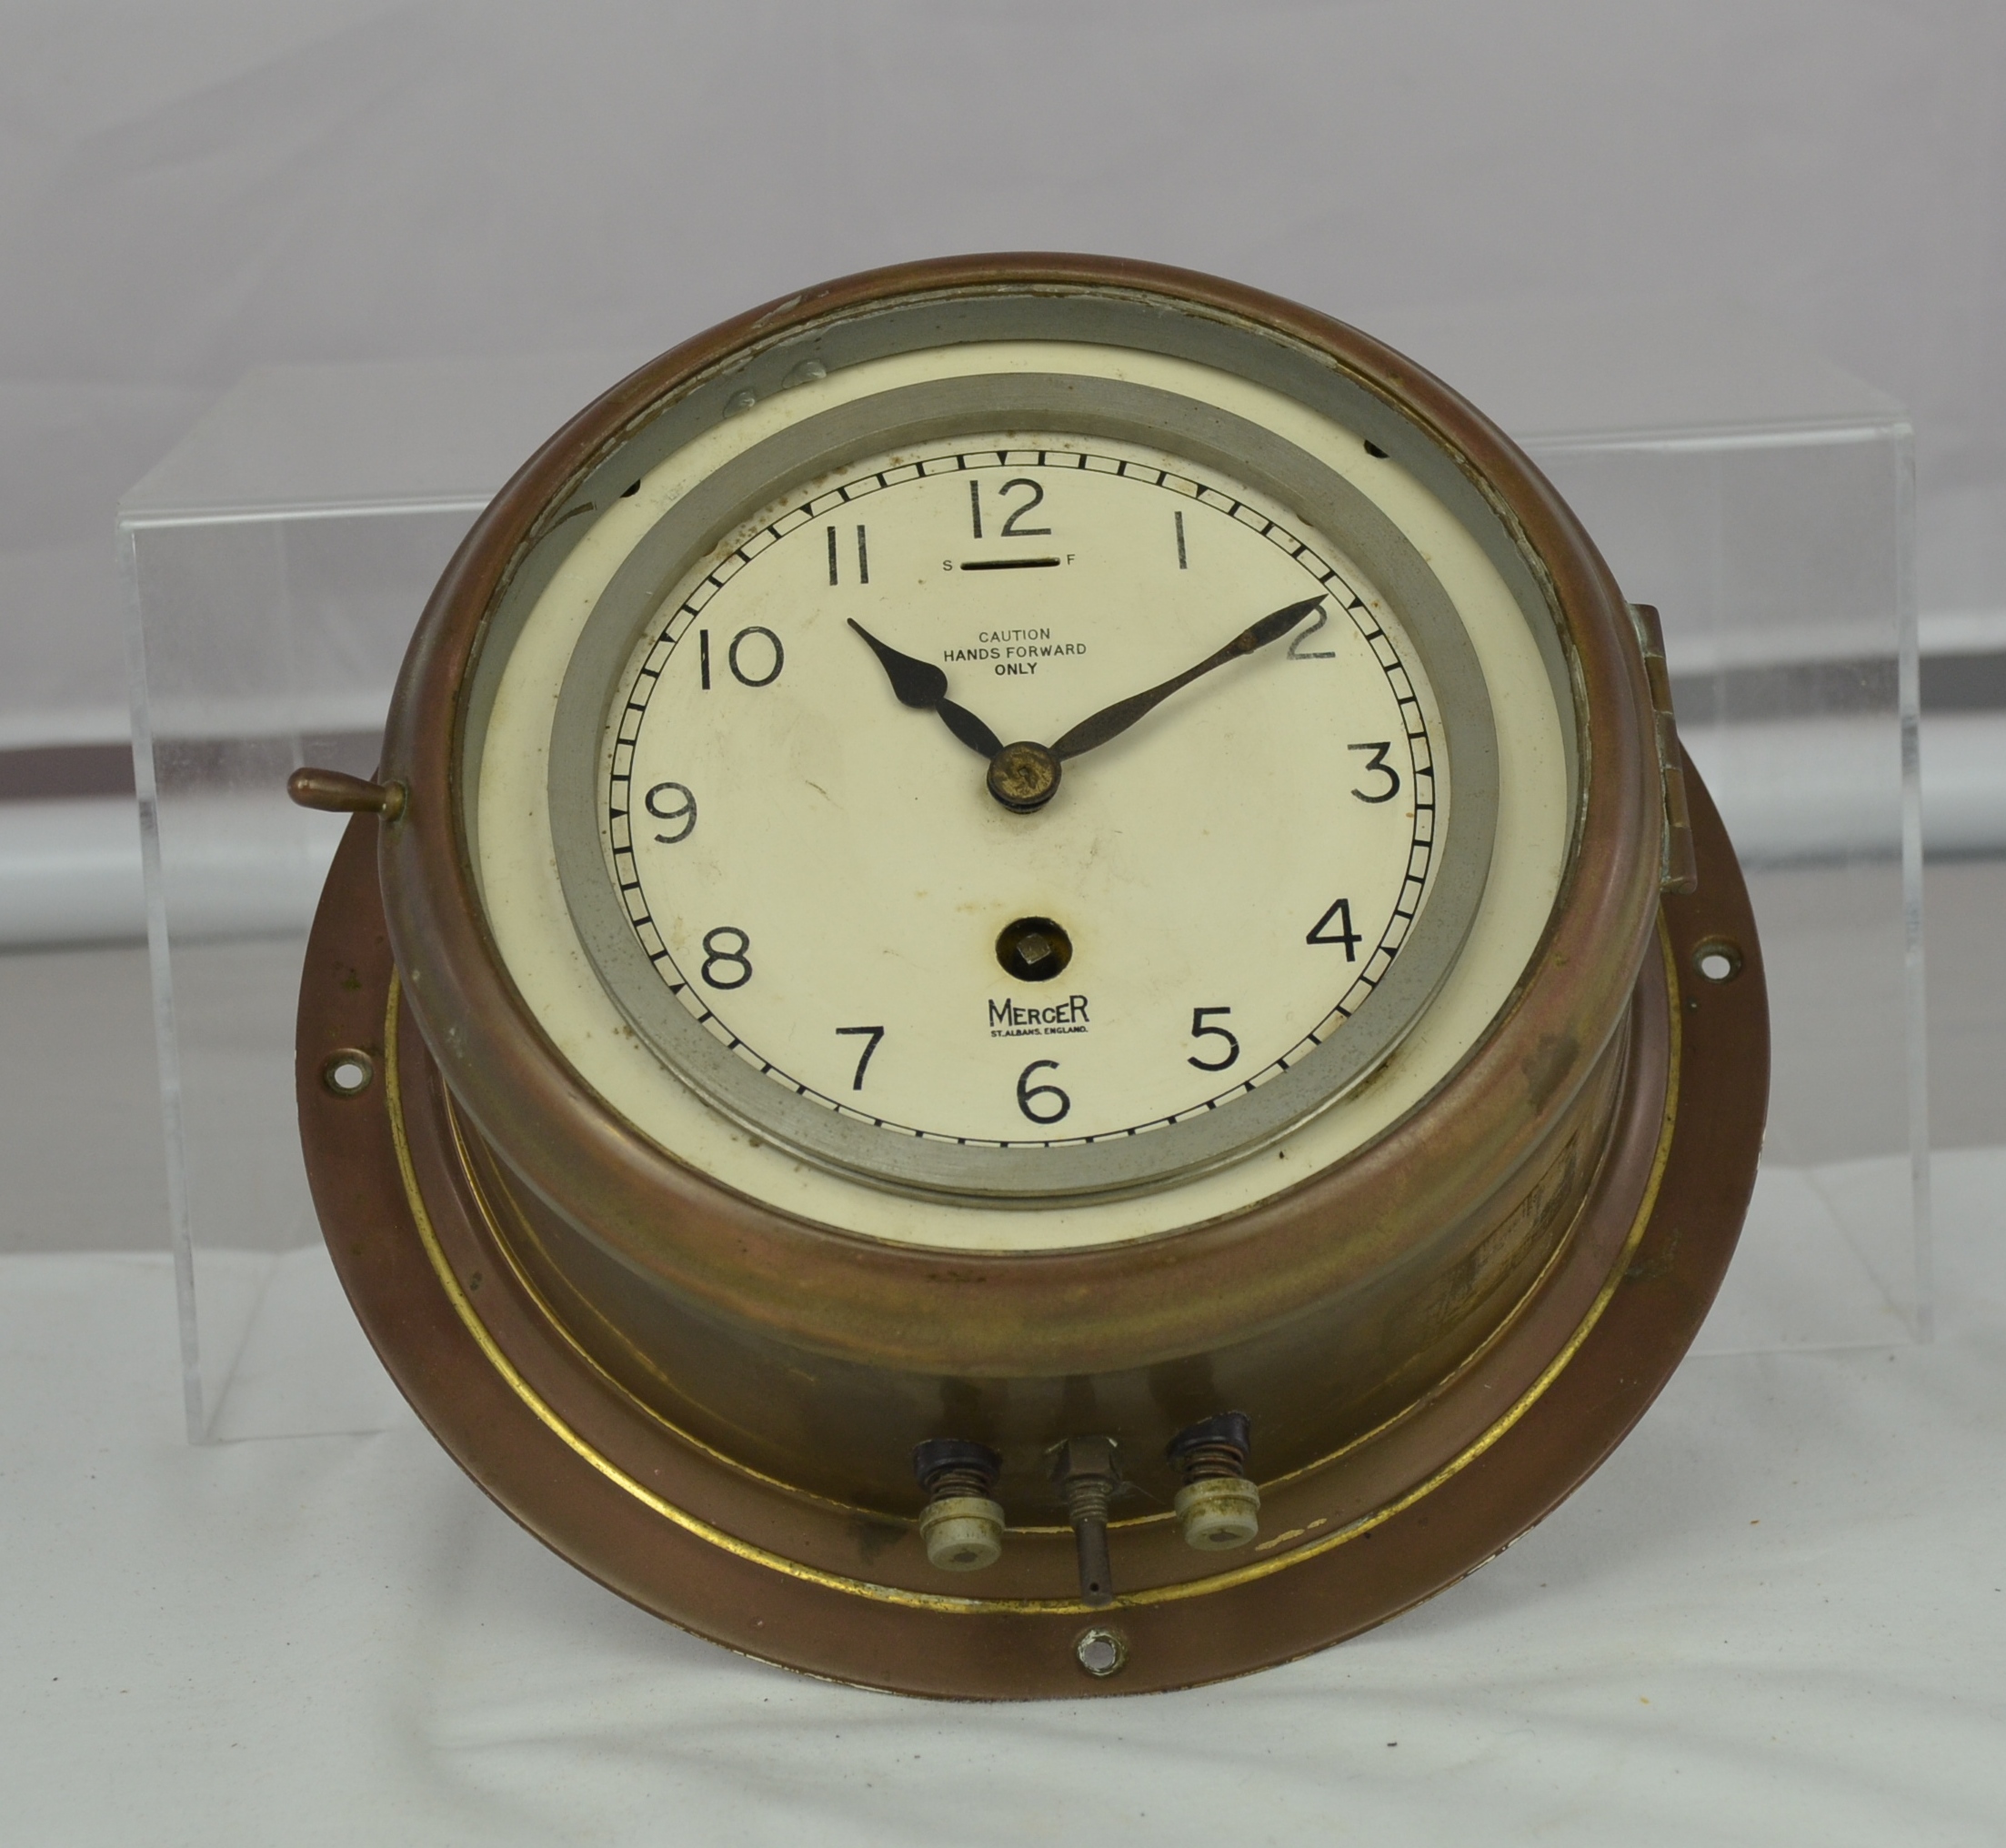 c1930's Smith 8 Day Ships Clock